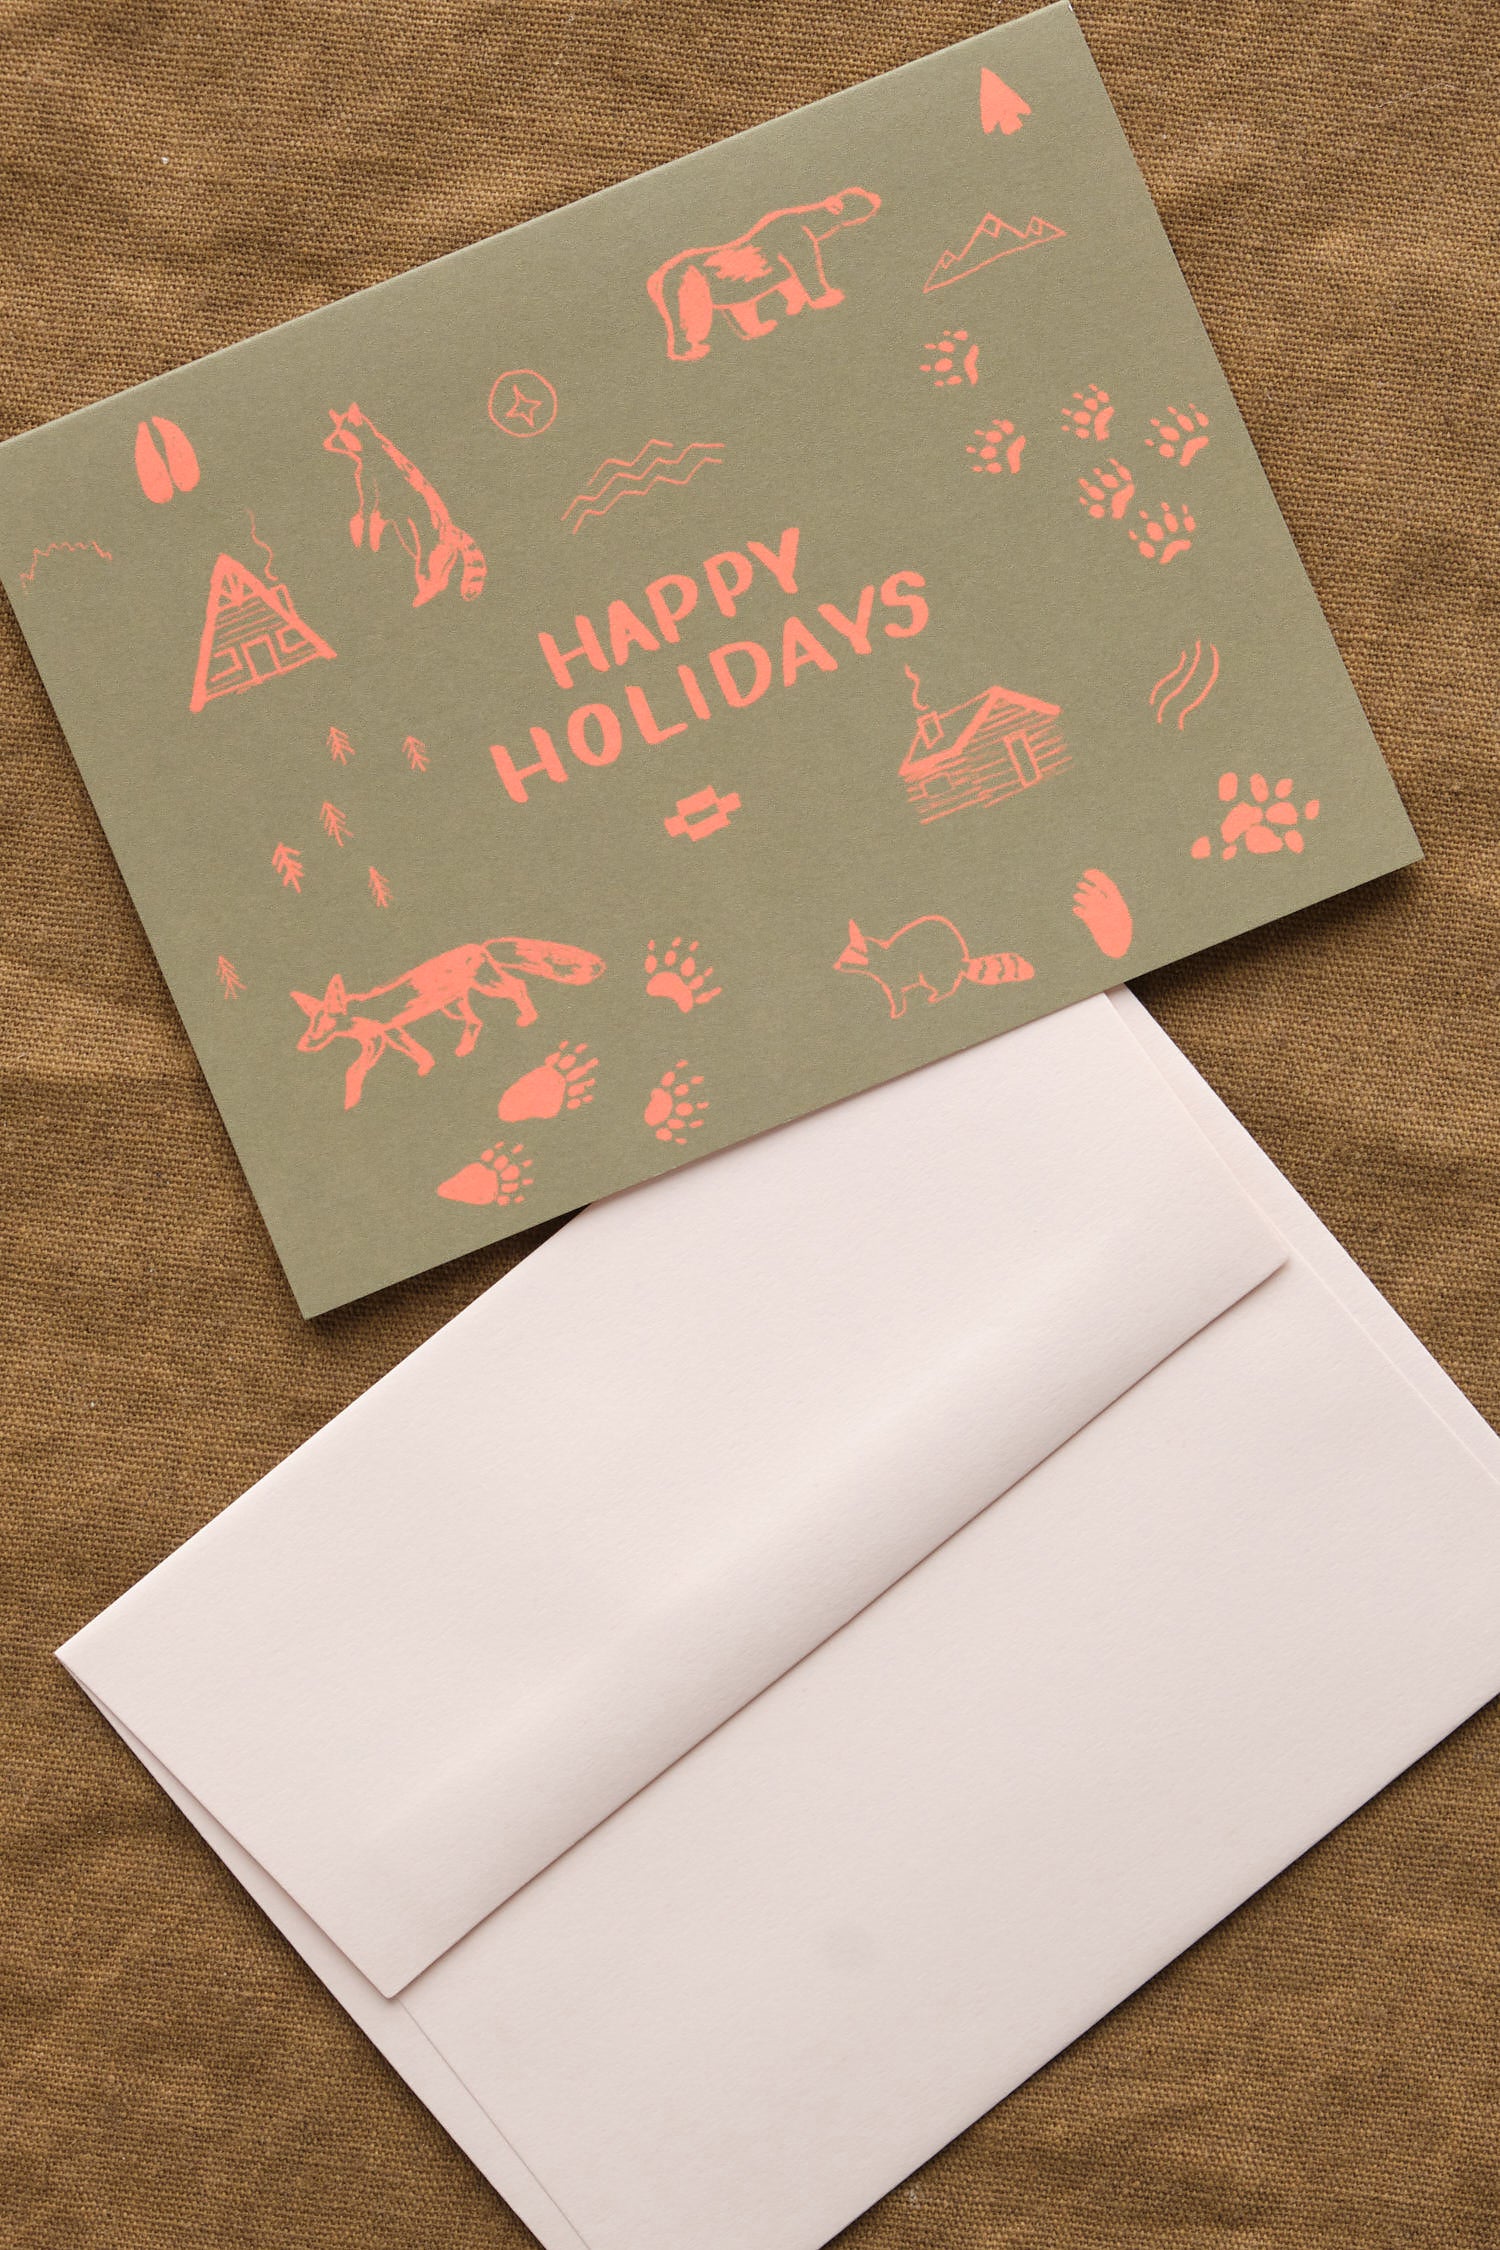 Happy Holidays Maps Symbols Card with envelope